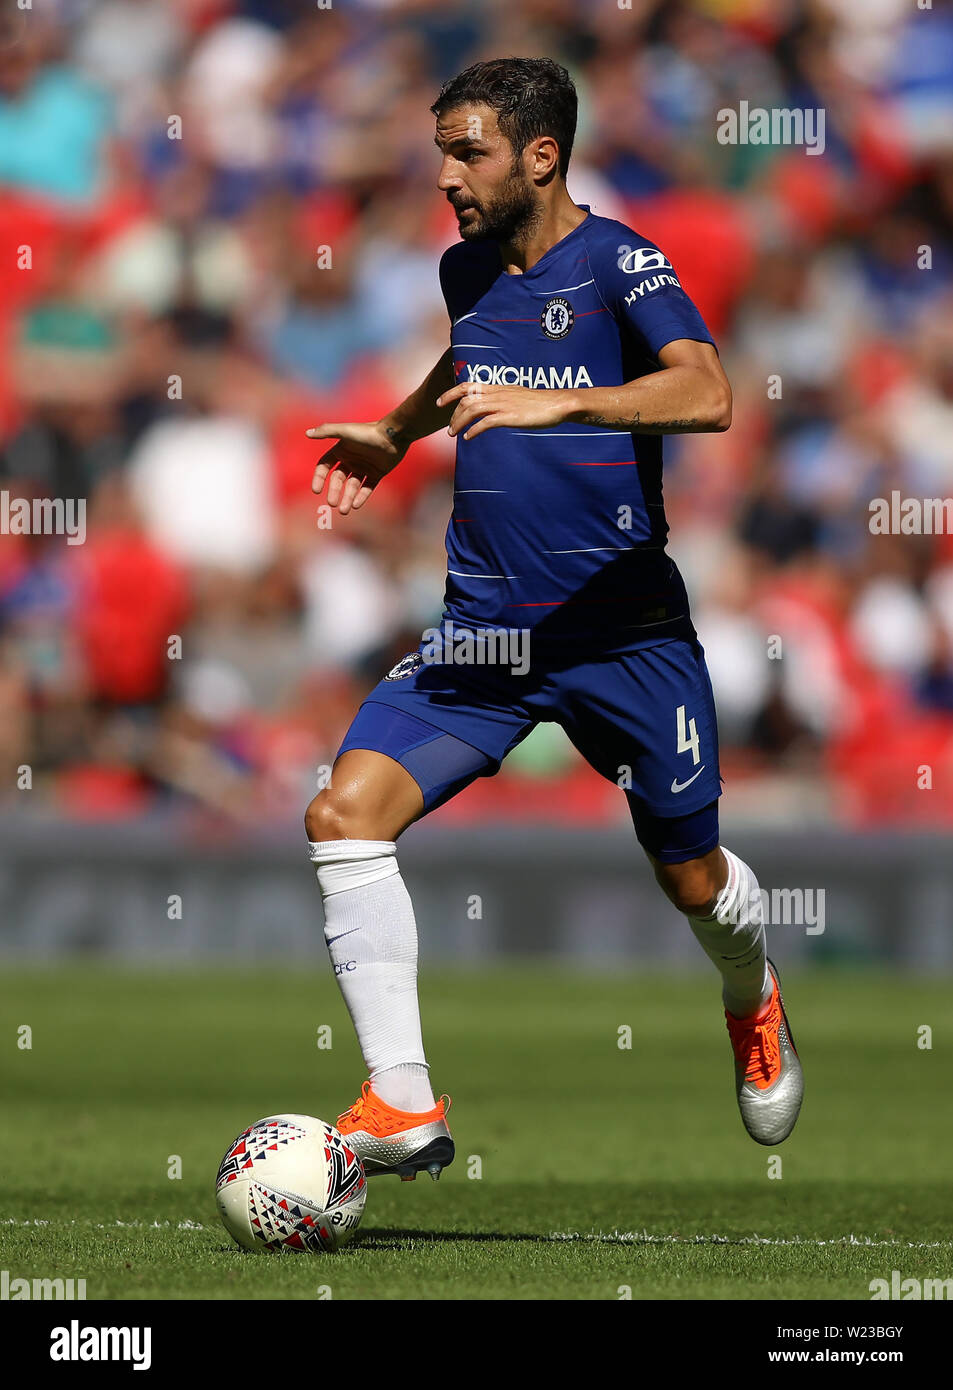 Cesc Fabregas von Chelsea - Chelsea V Manchester City, FA Community Shield, Wembley Stadion, London (Wembley) - 5. August 2018 Stockfoto